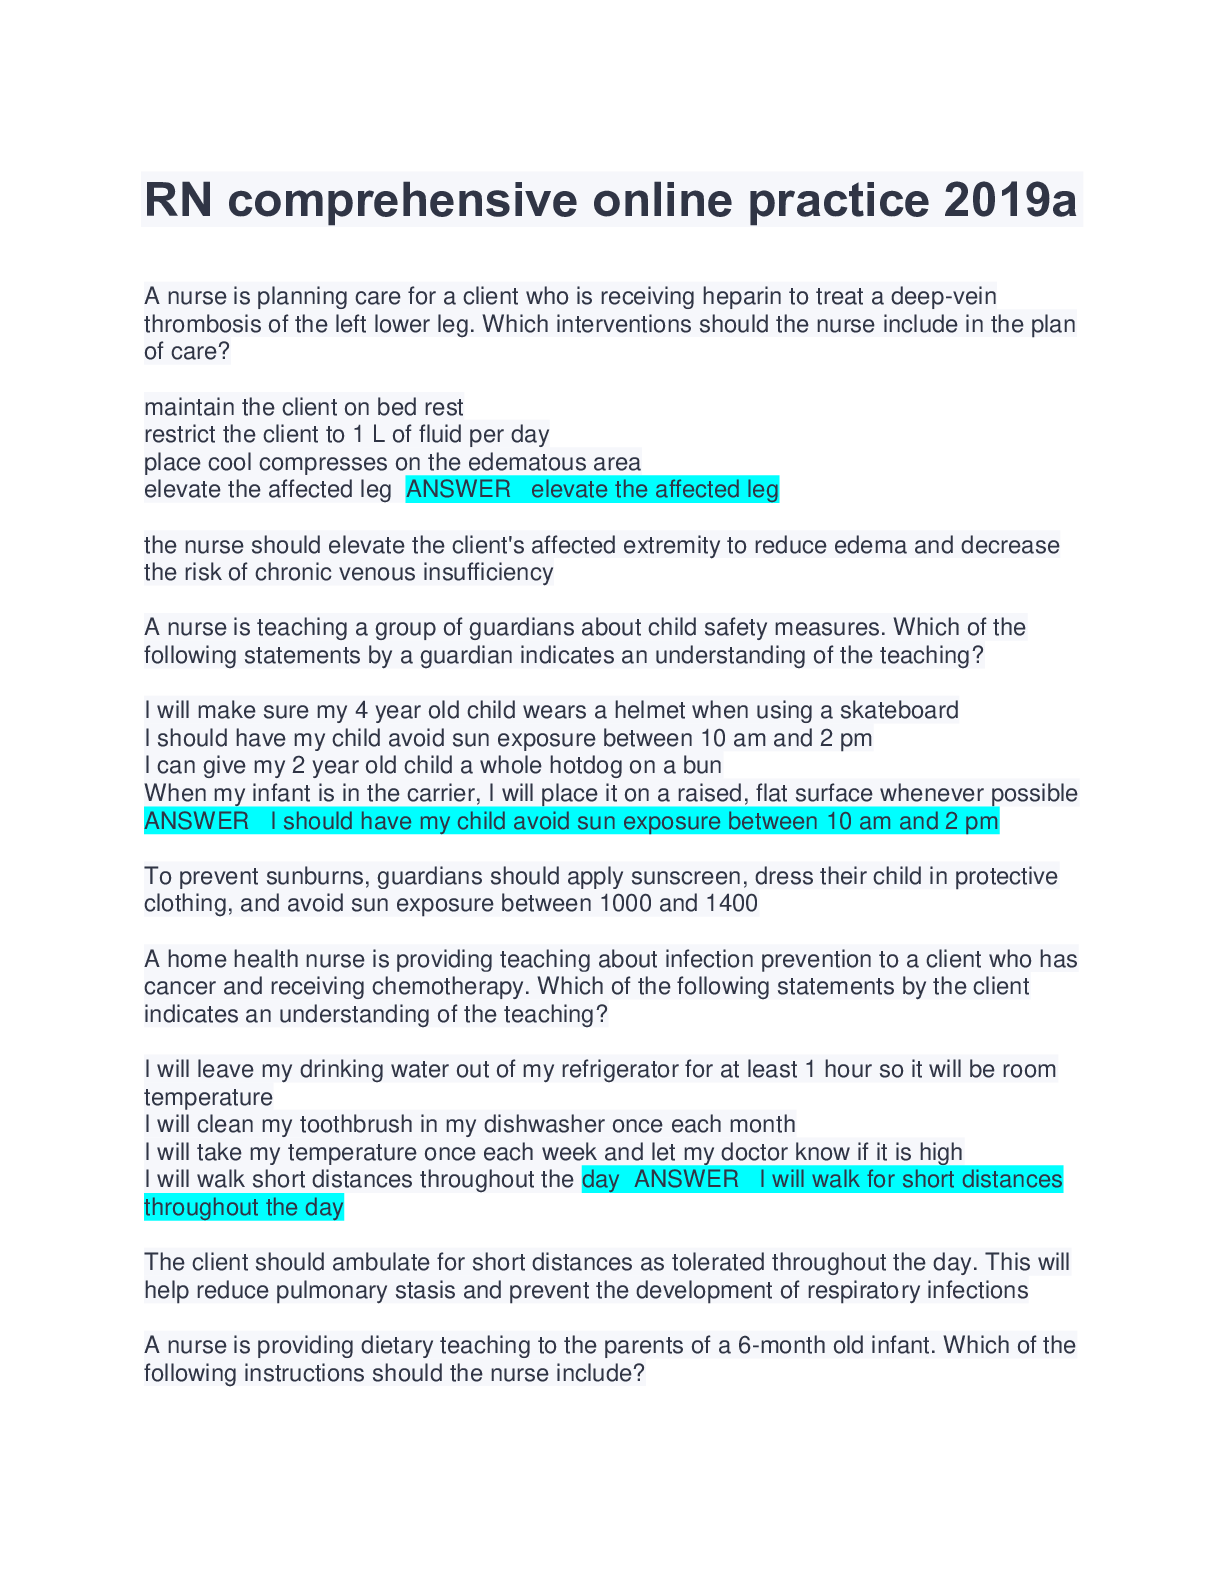 RN comprehensive online practice 2019a Browsegrades